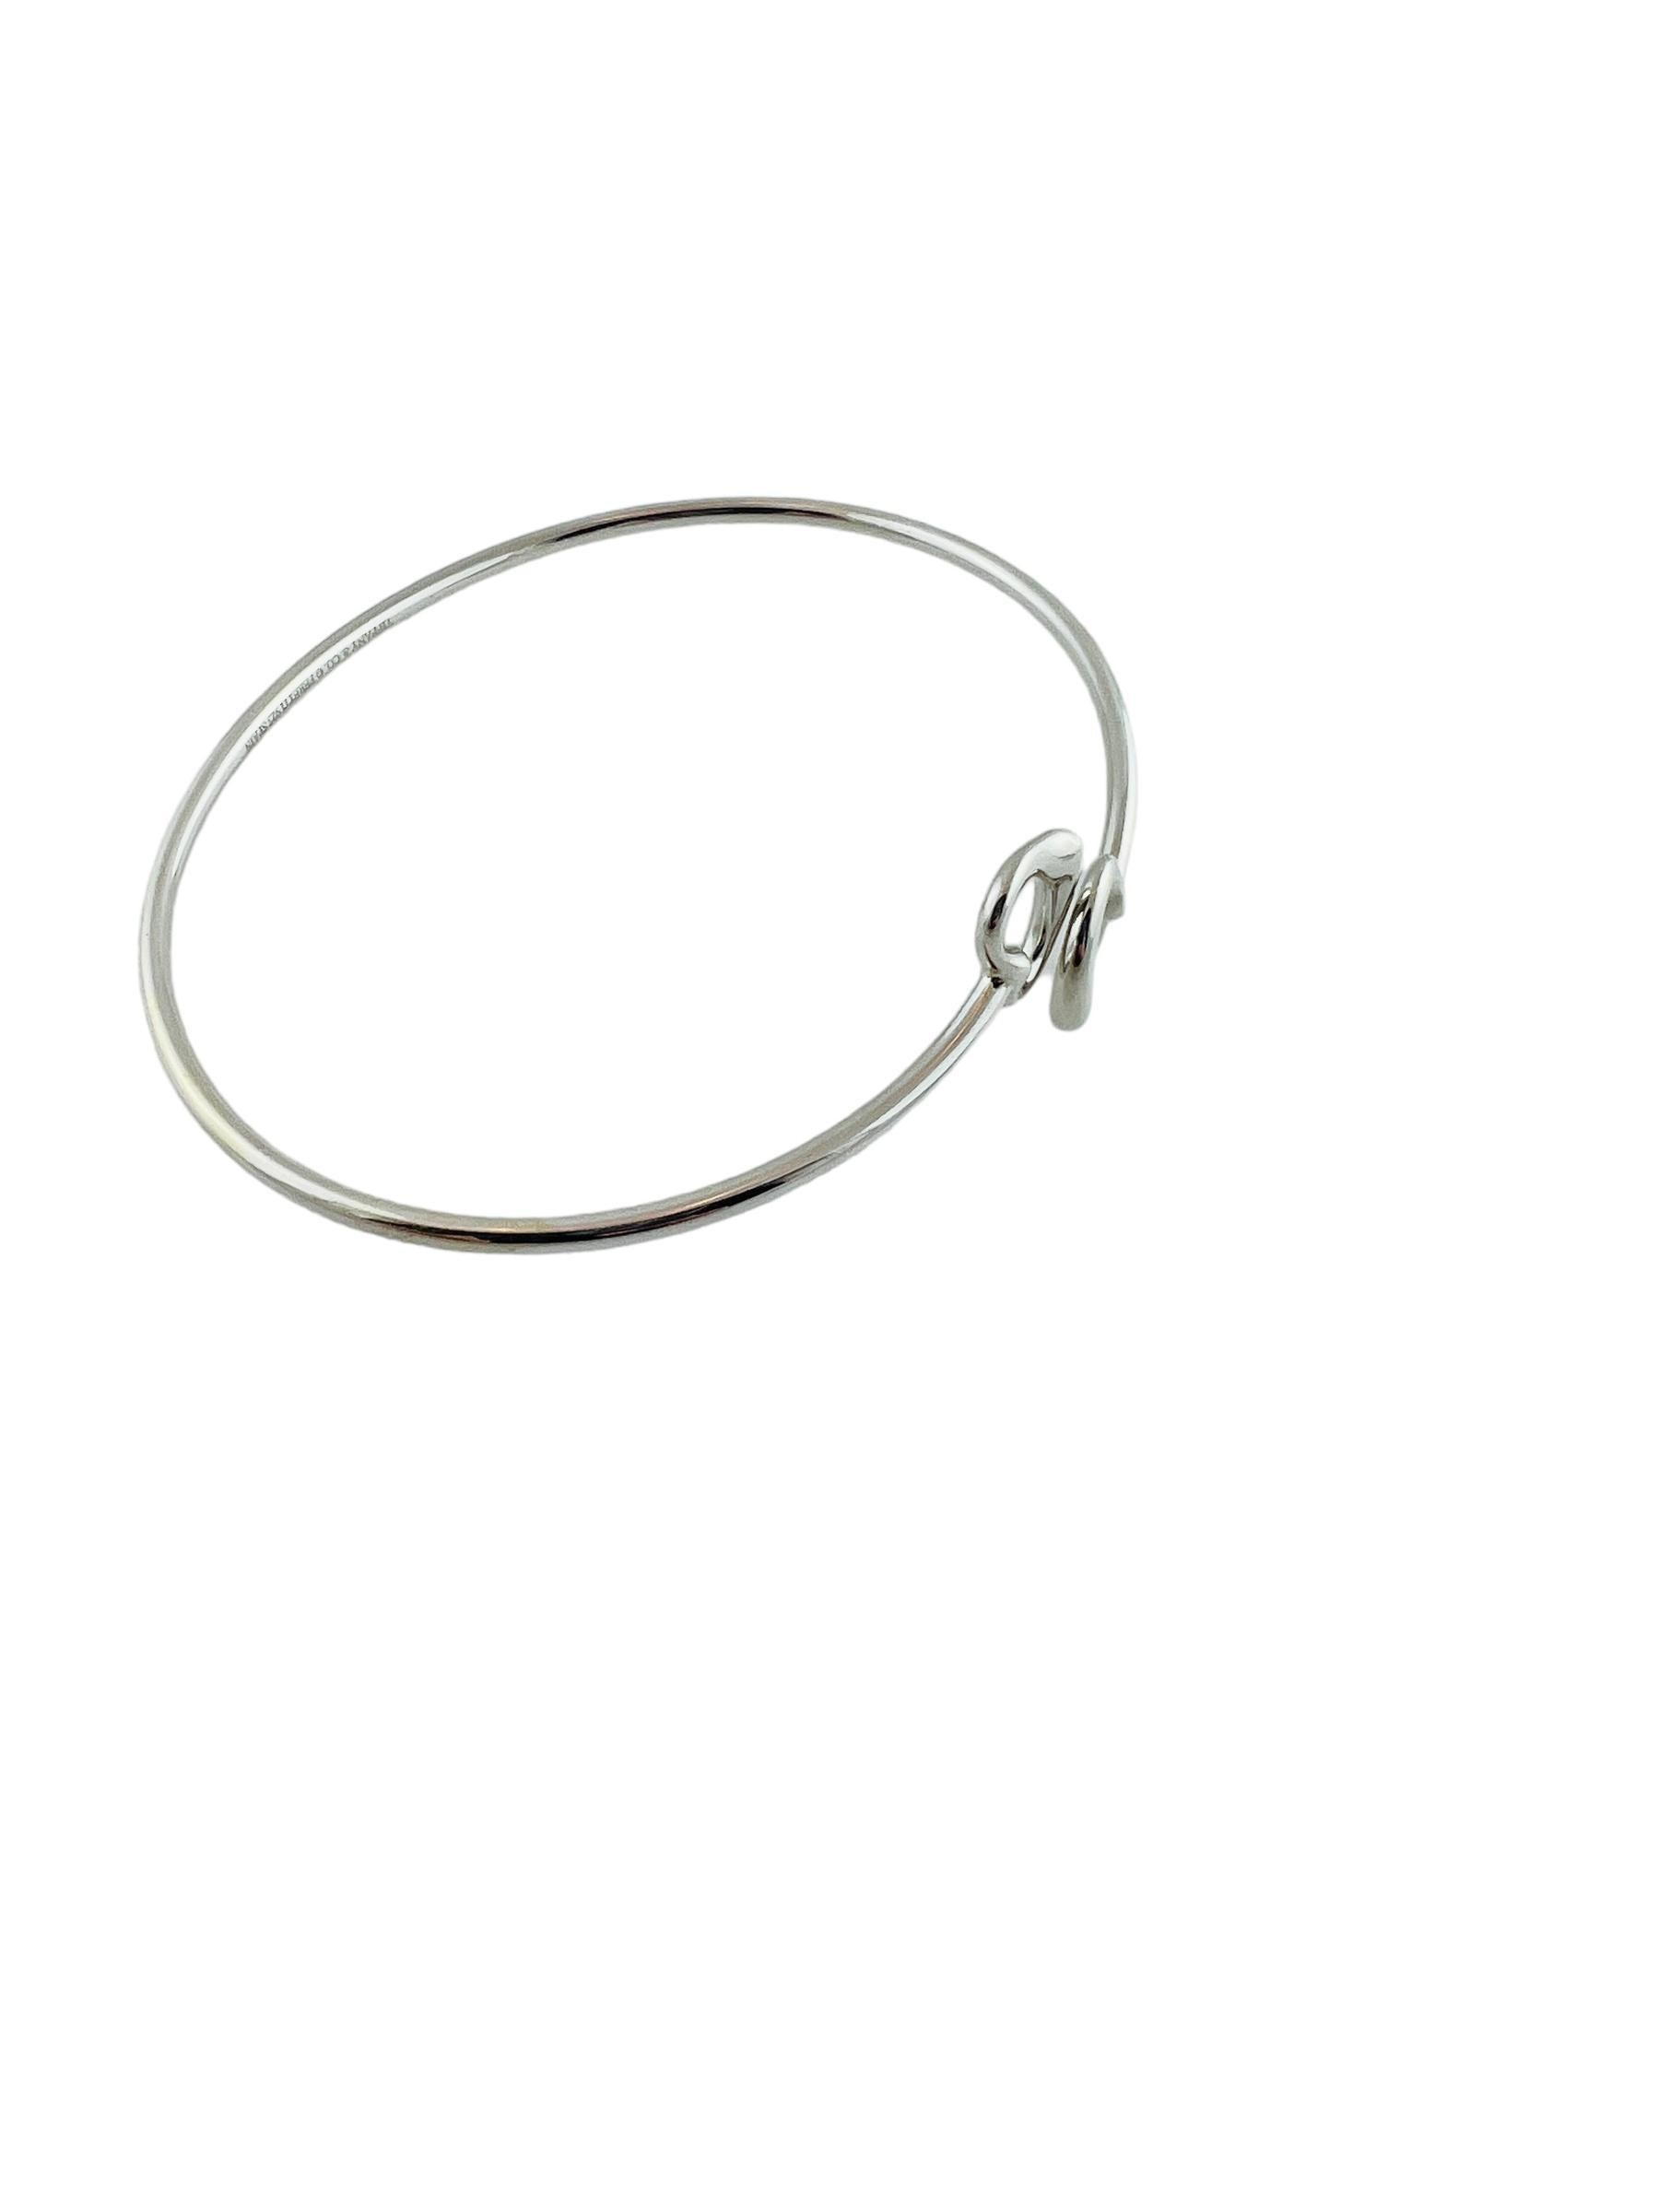 Tiffany & Co. Elsa Peretti Sterling Silver Double Heart Bangle Bracelet #15447 1